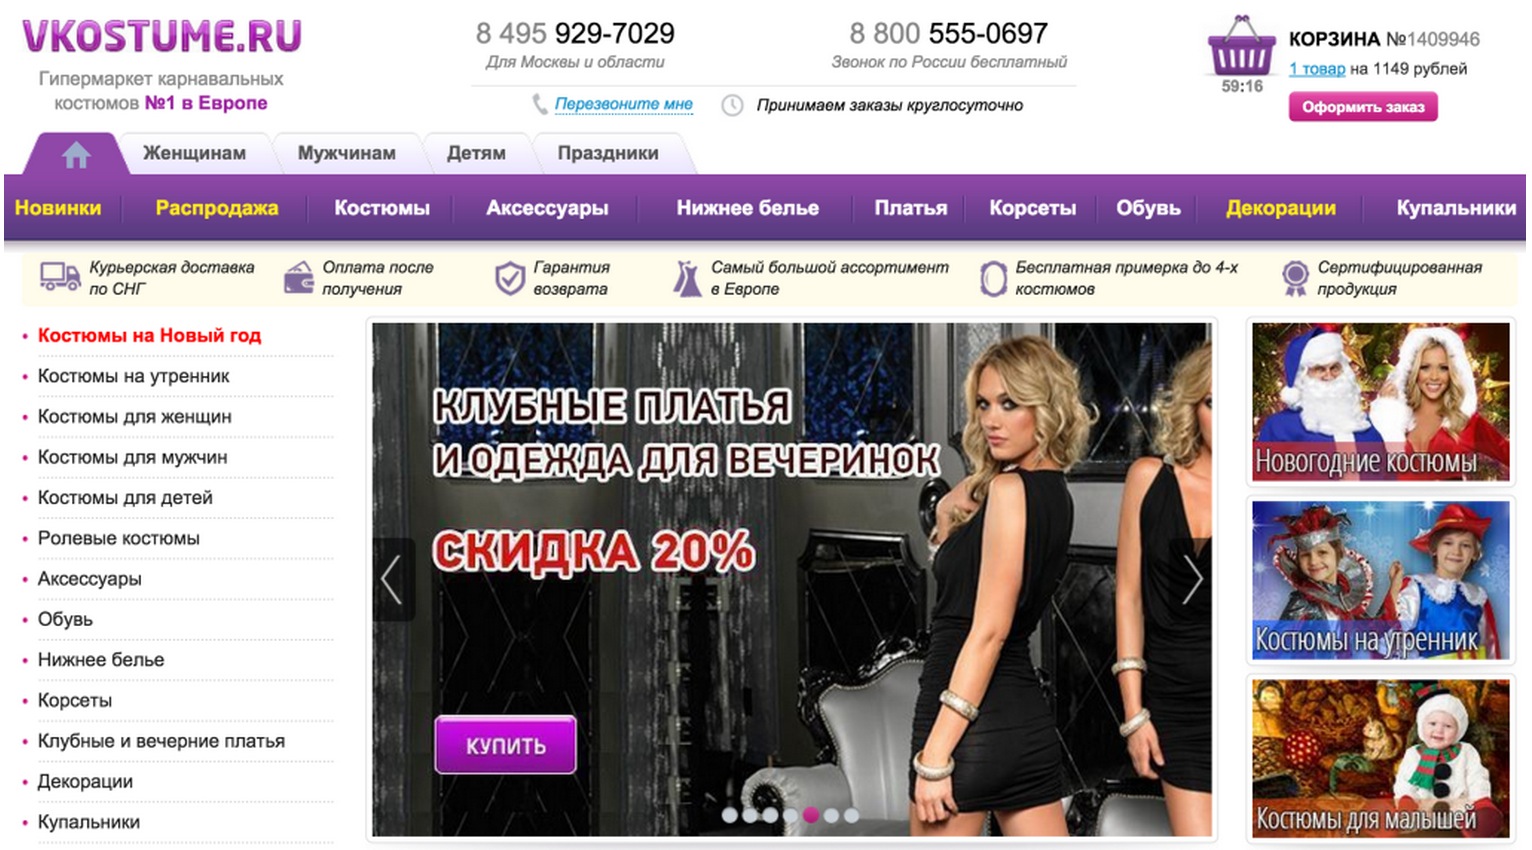 Интернет-магазин Vkostume.ru